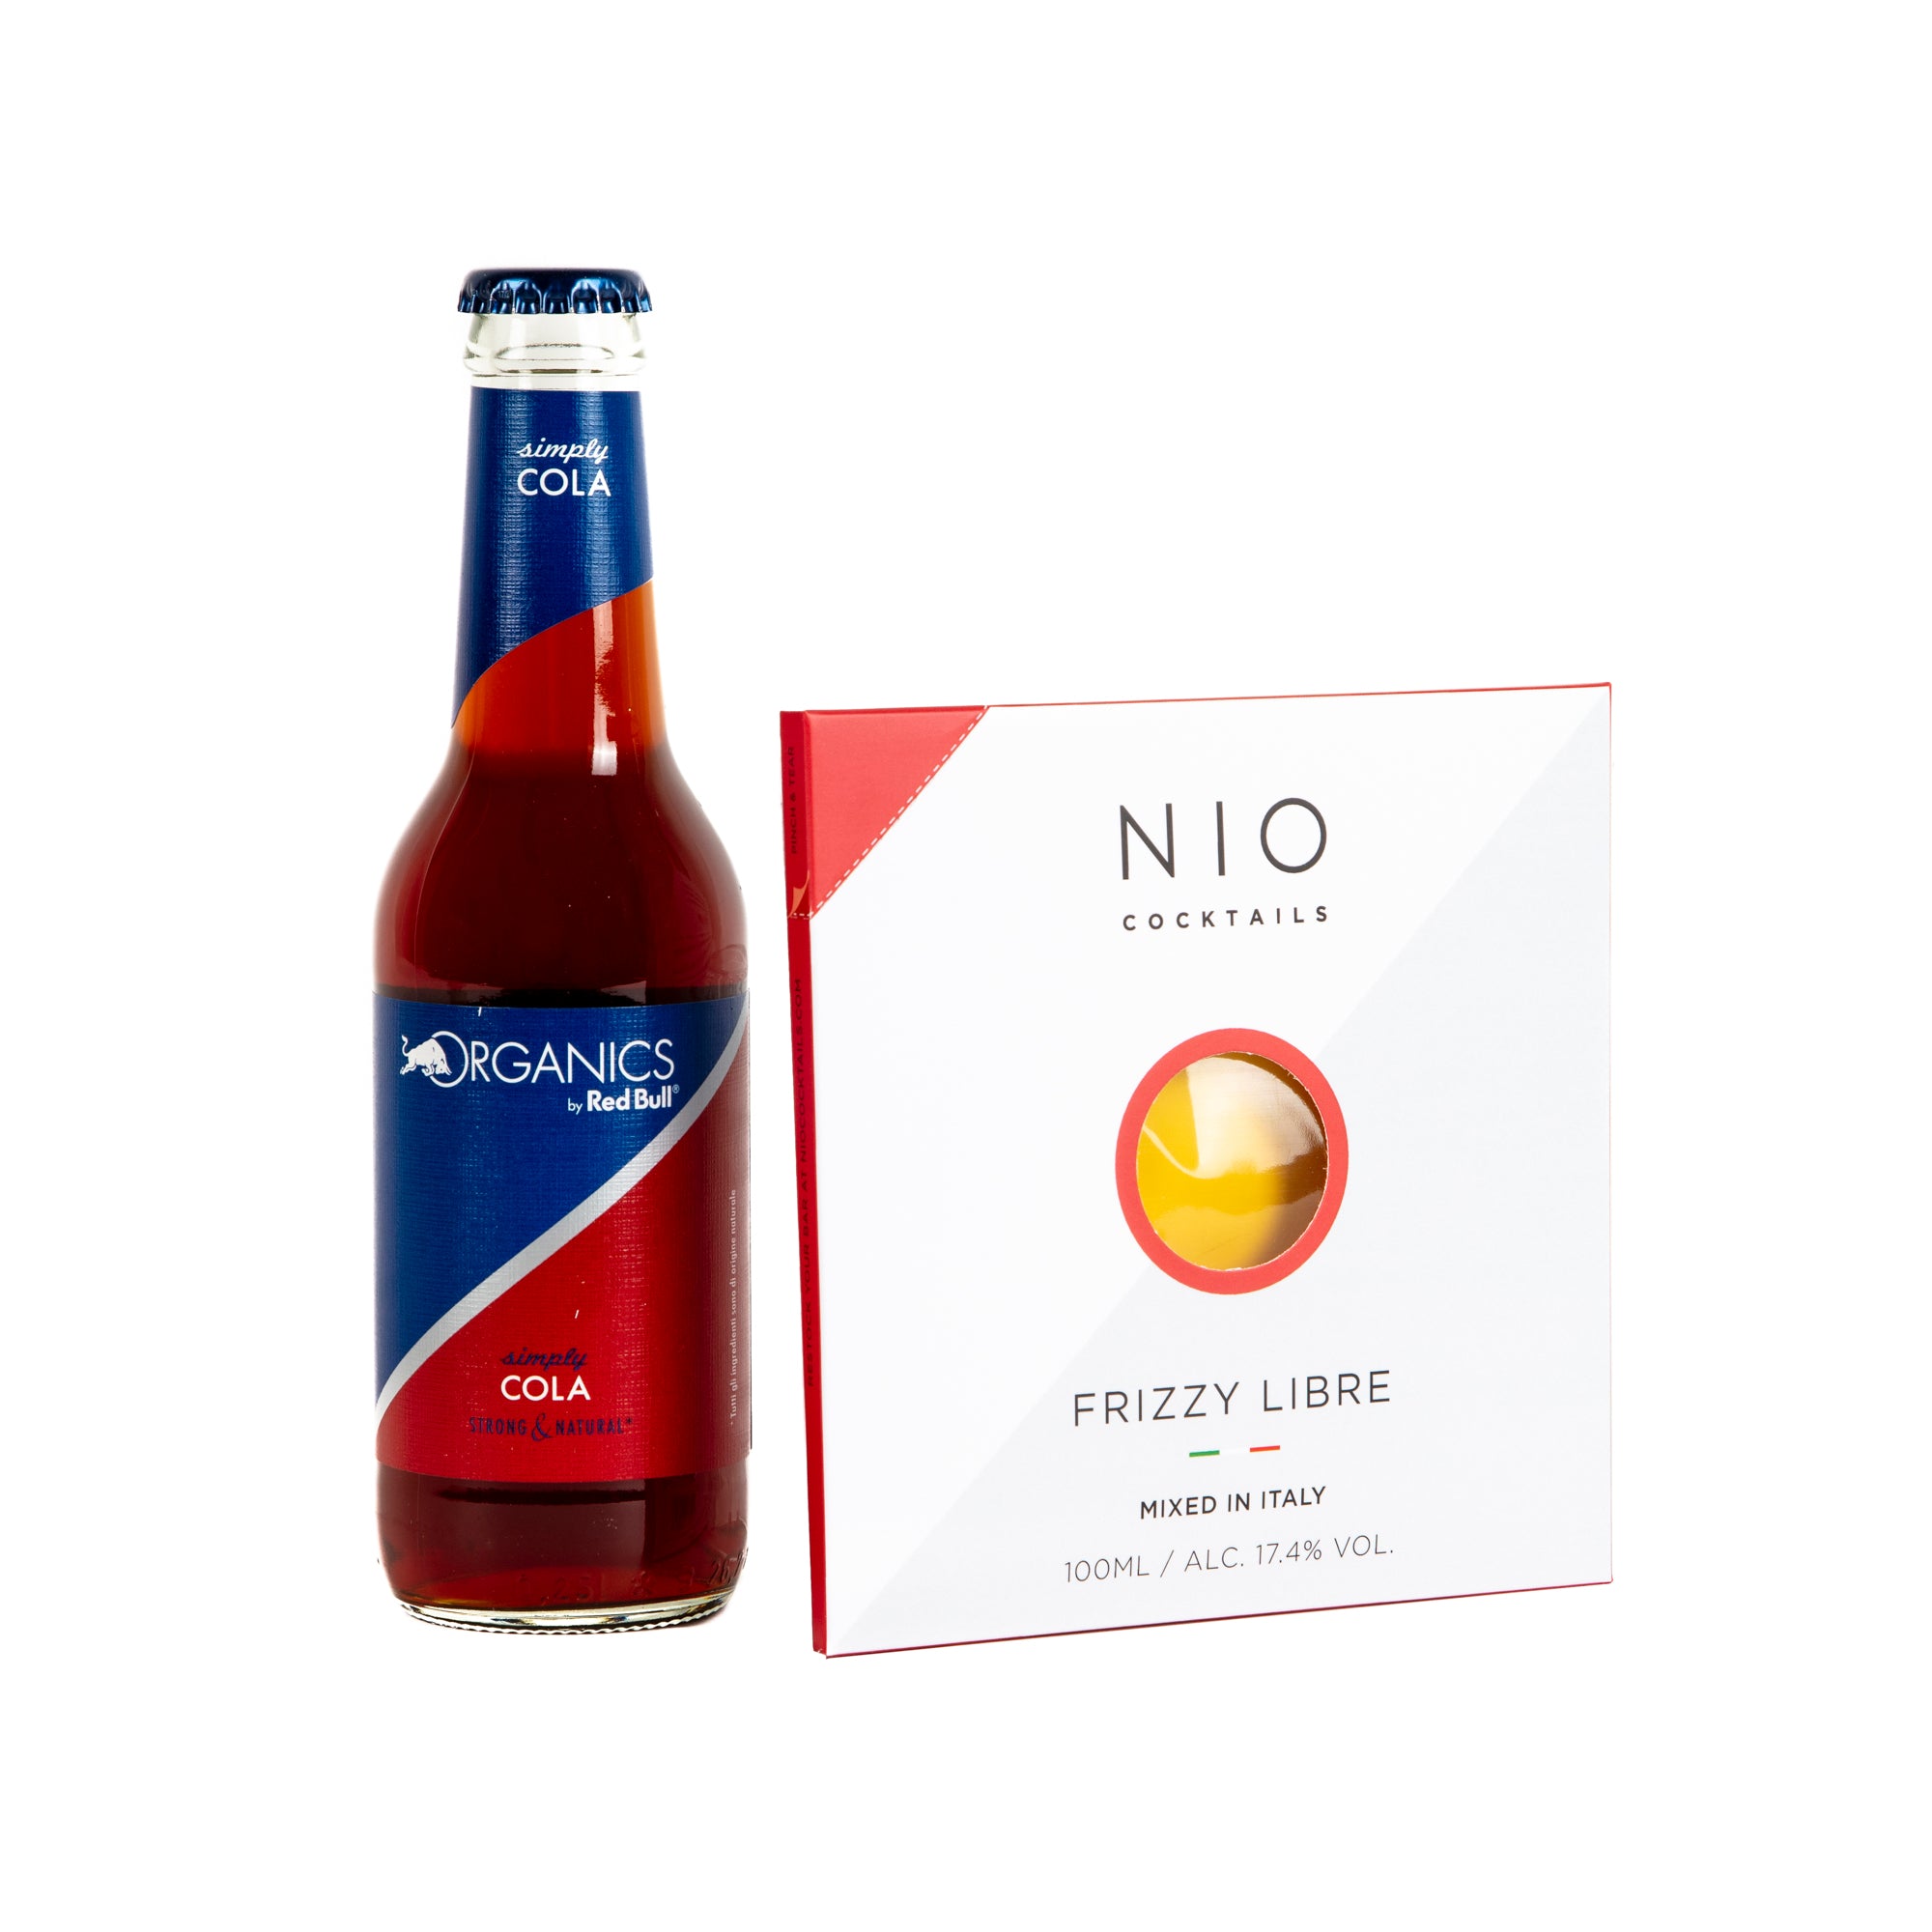 NIO Cocktails x Organics by Red Bull